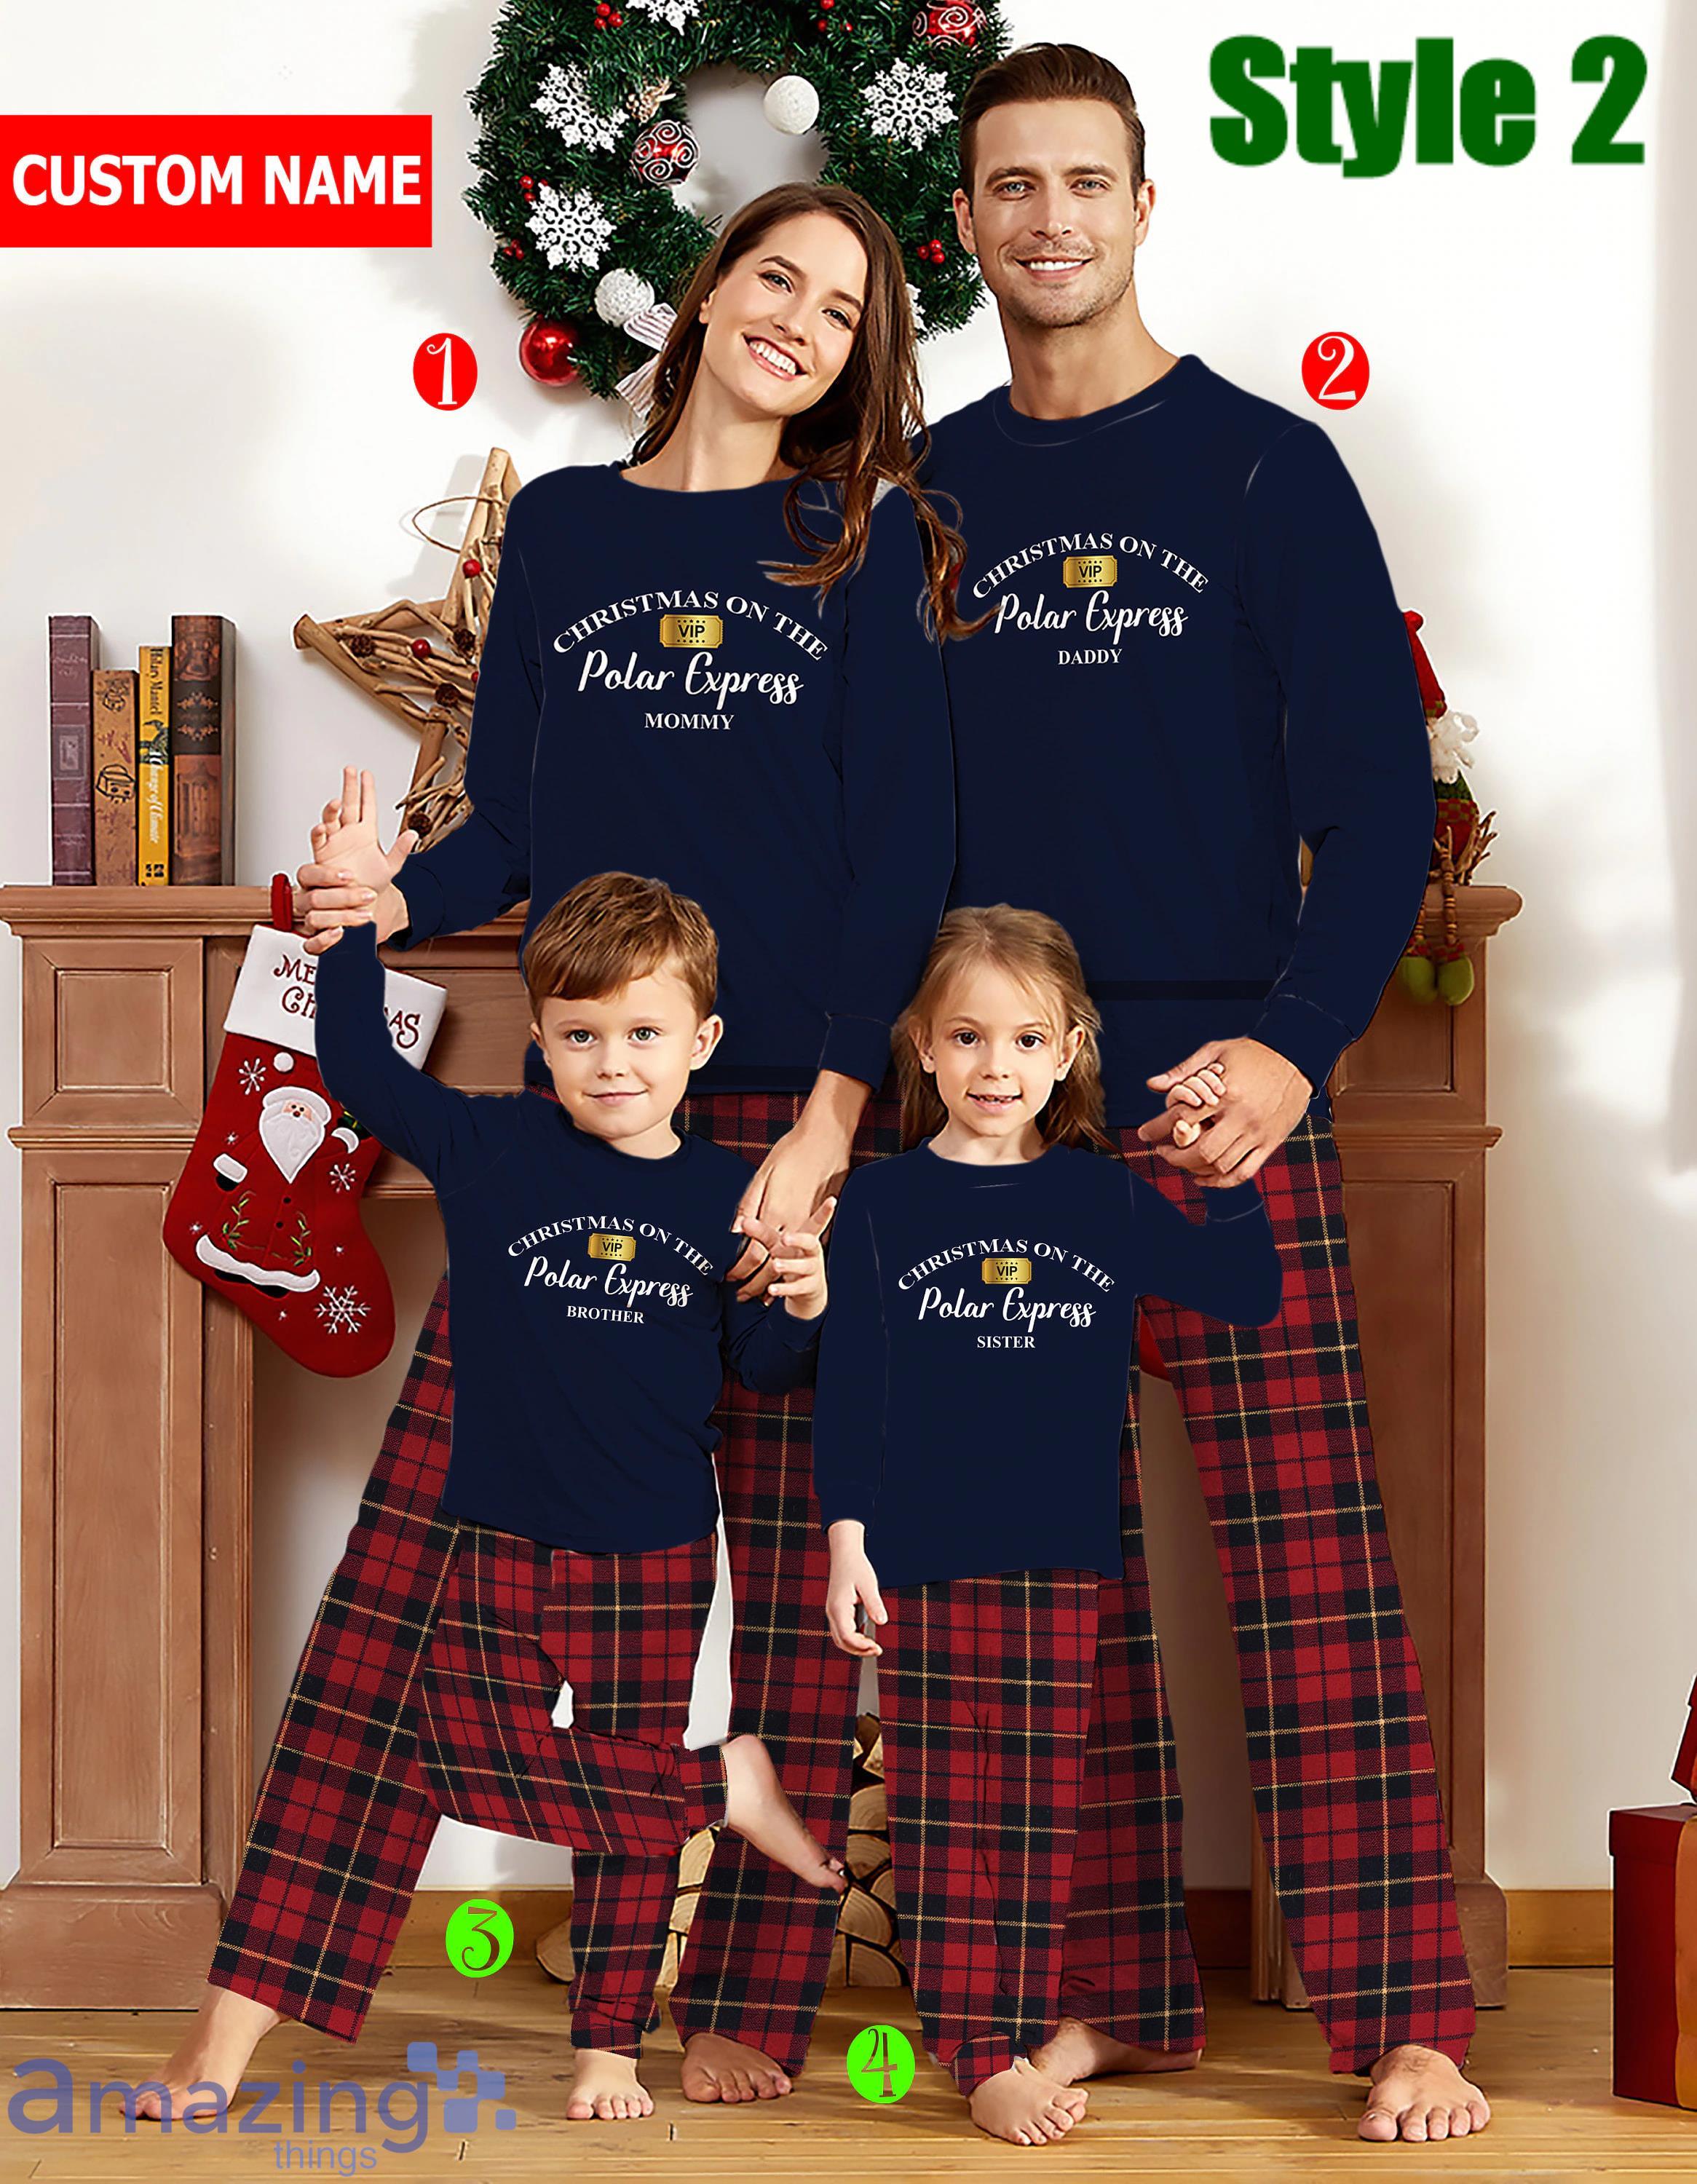 Custom Name Christmas One The Vip Polar Express Matching Family Pajamas Product Photo 2